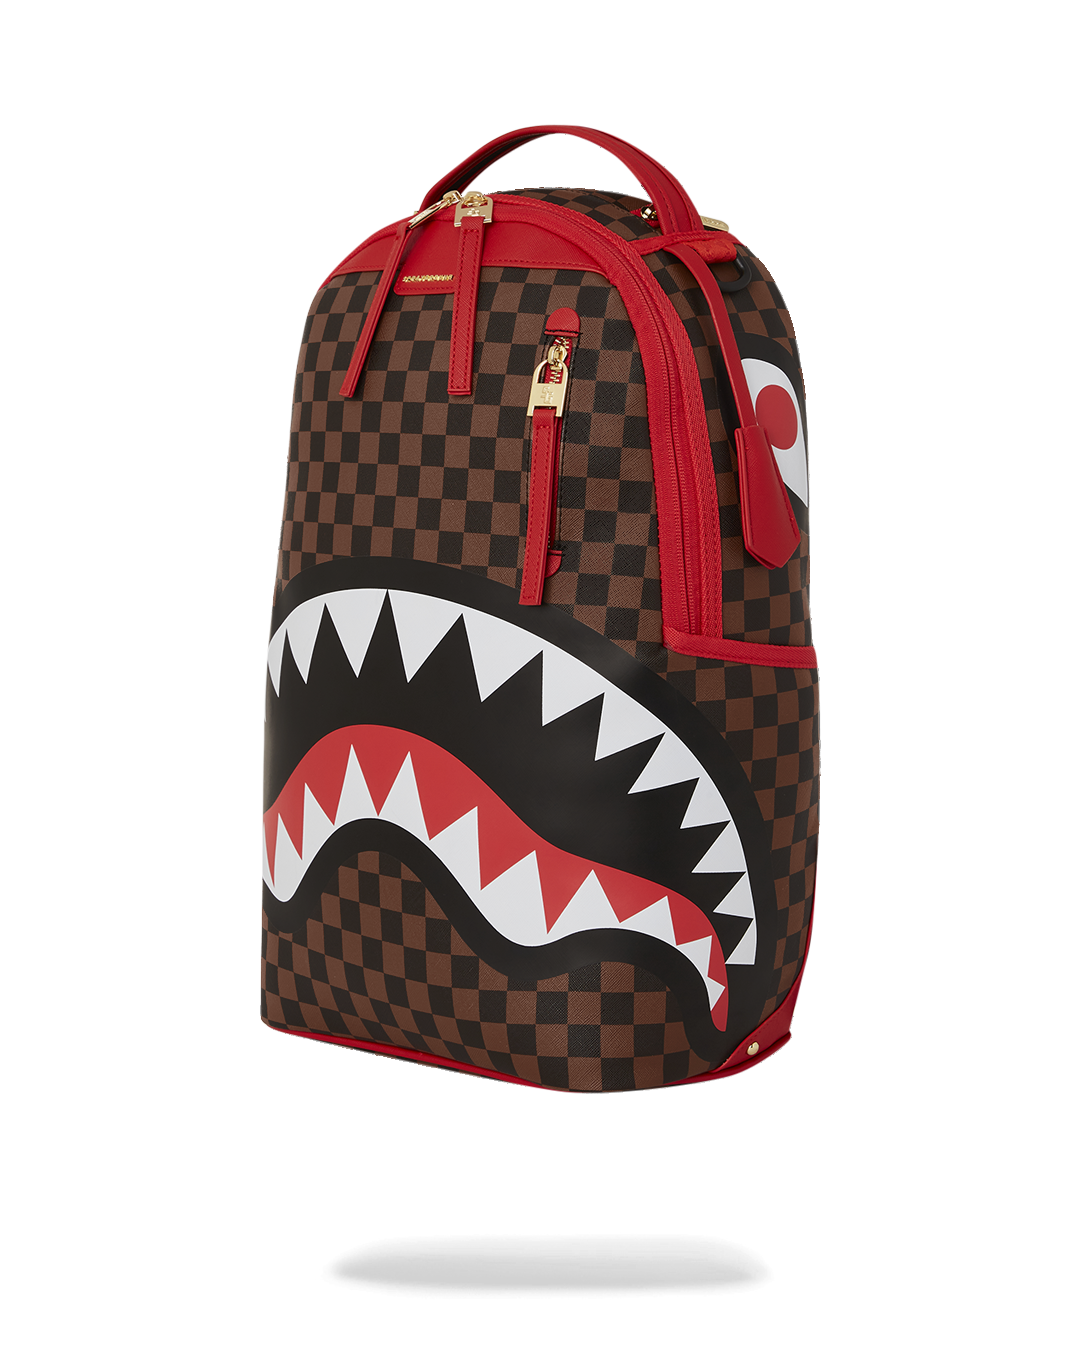 Backpacks Sprayground - Shark In Paris backpack -  B2947SHARKINPARISMEAN&CLEAN